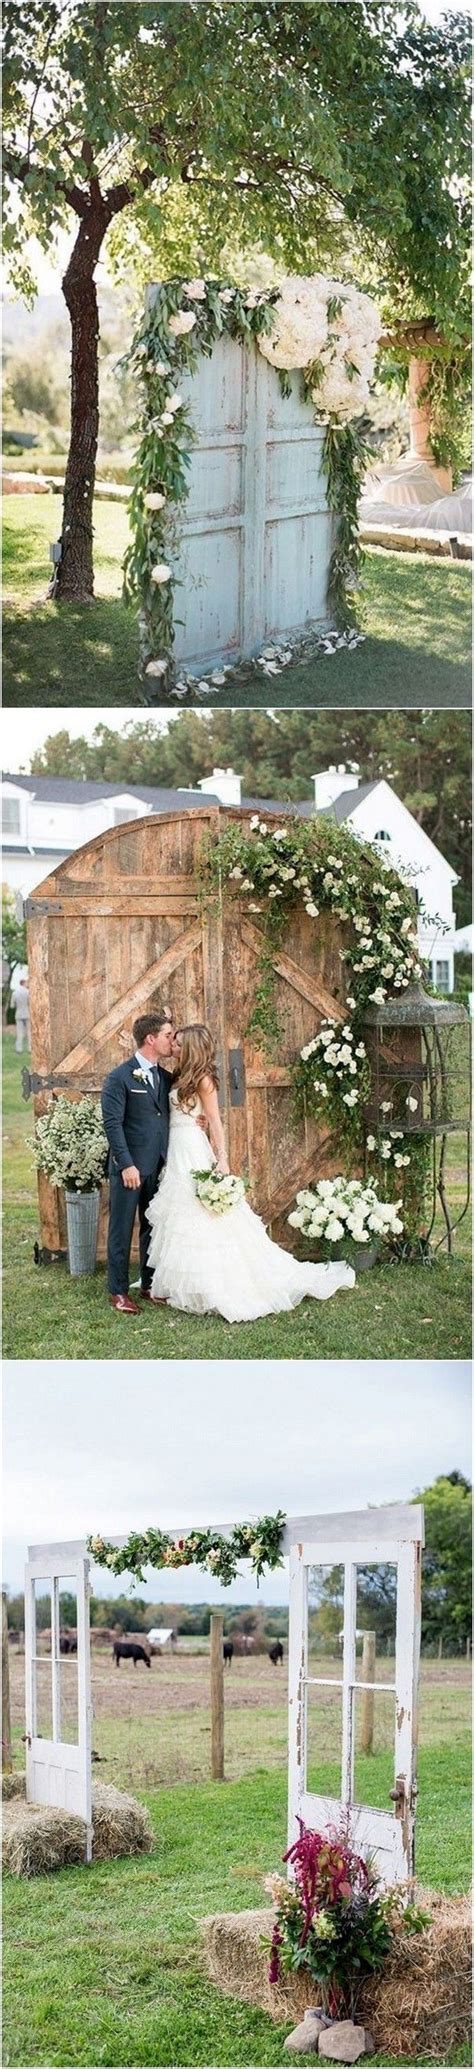 22 Rustic Old Door Wedding Backdrop And Ceremony Entrance Ideas In 2020